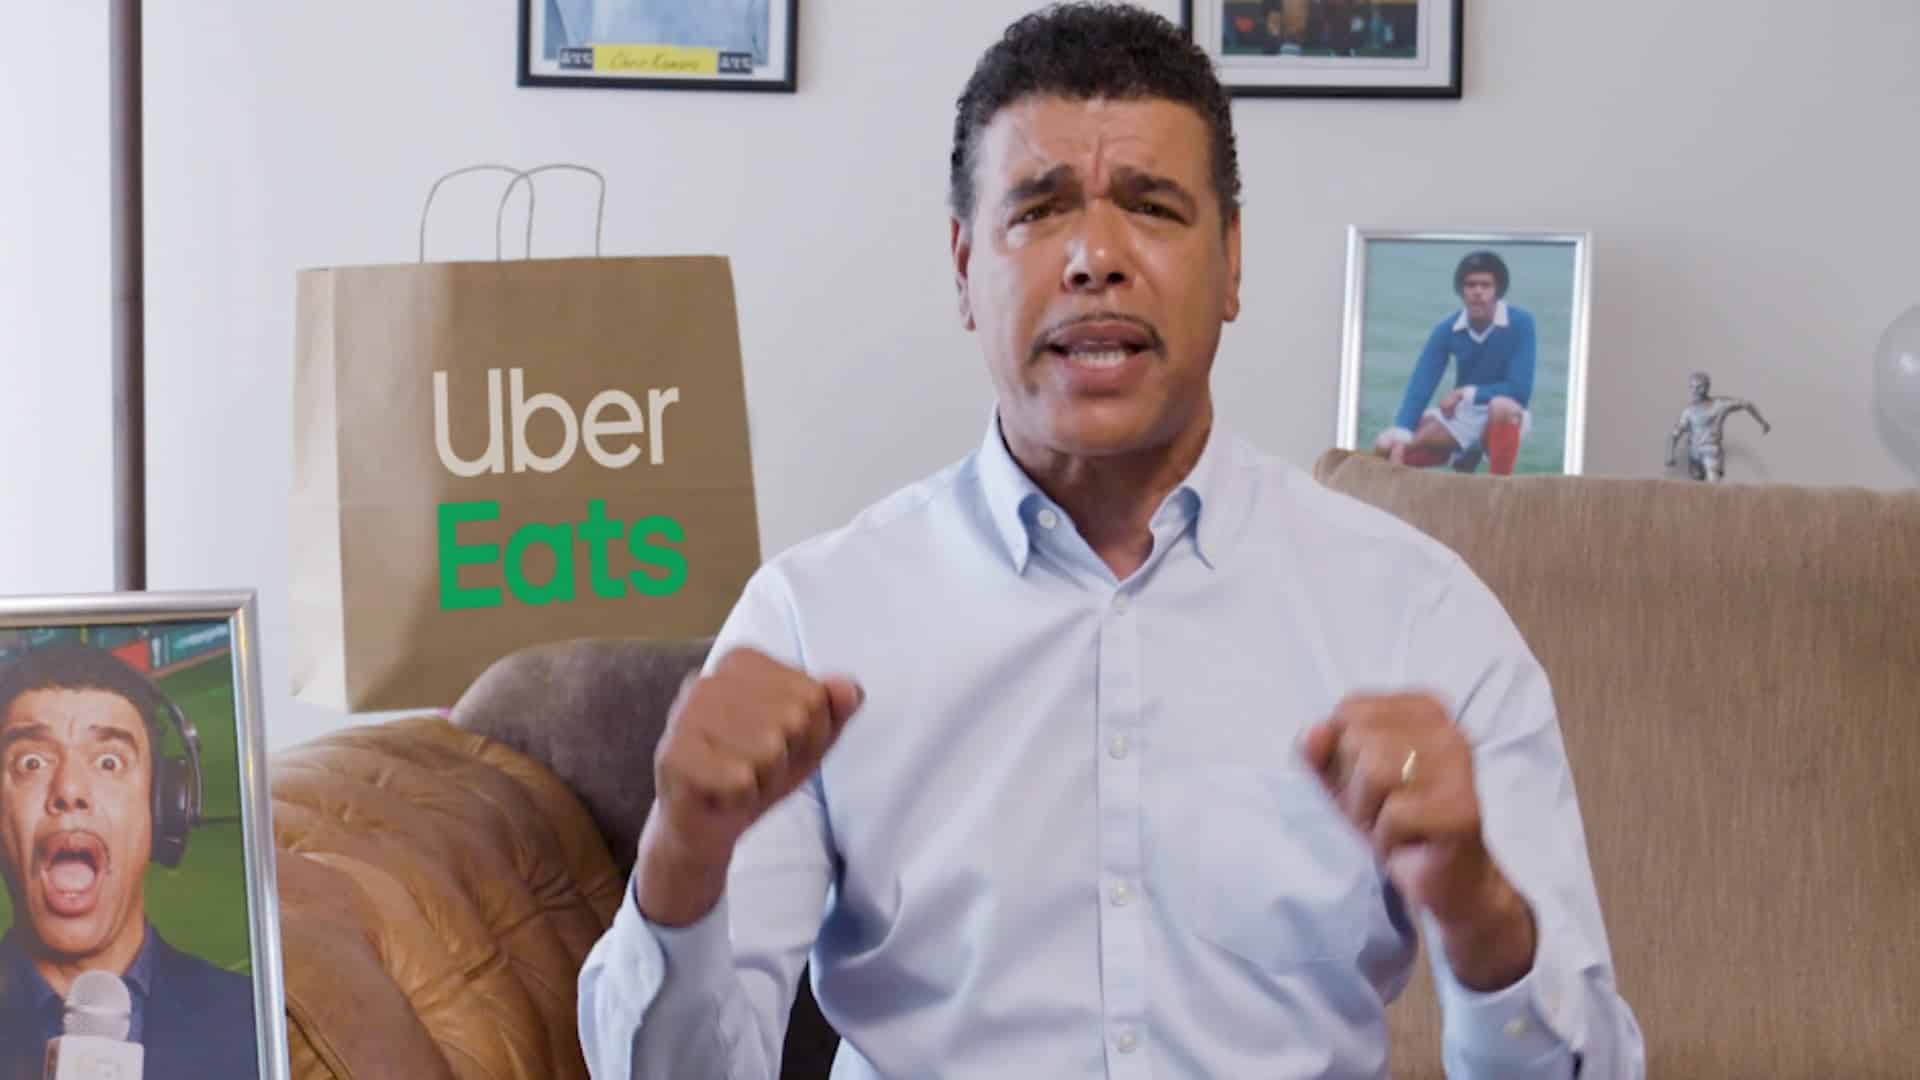 An image of Uber Eats